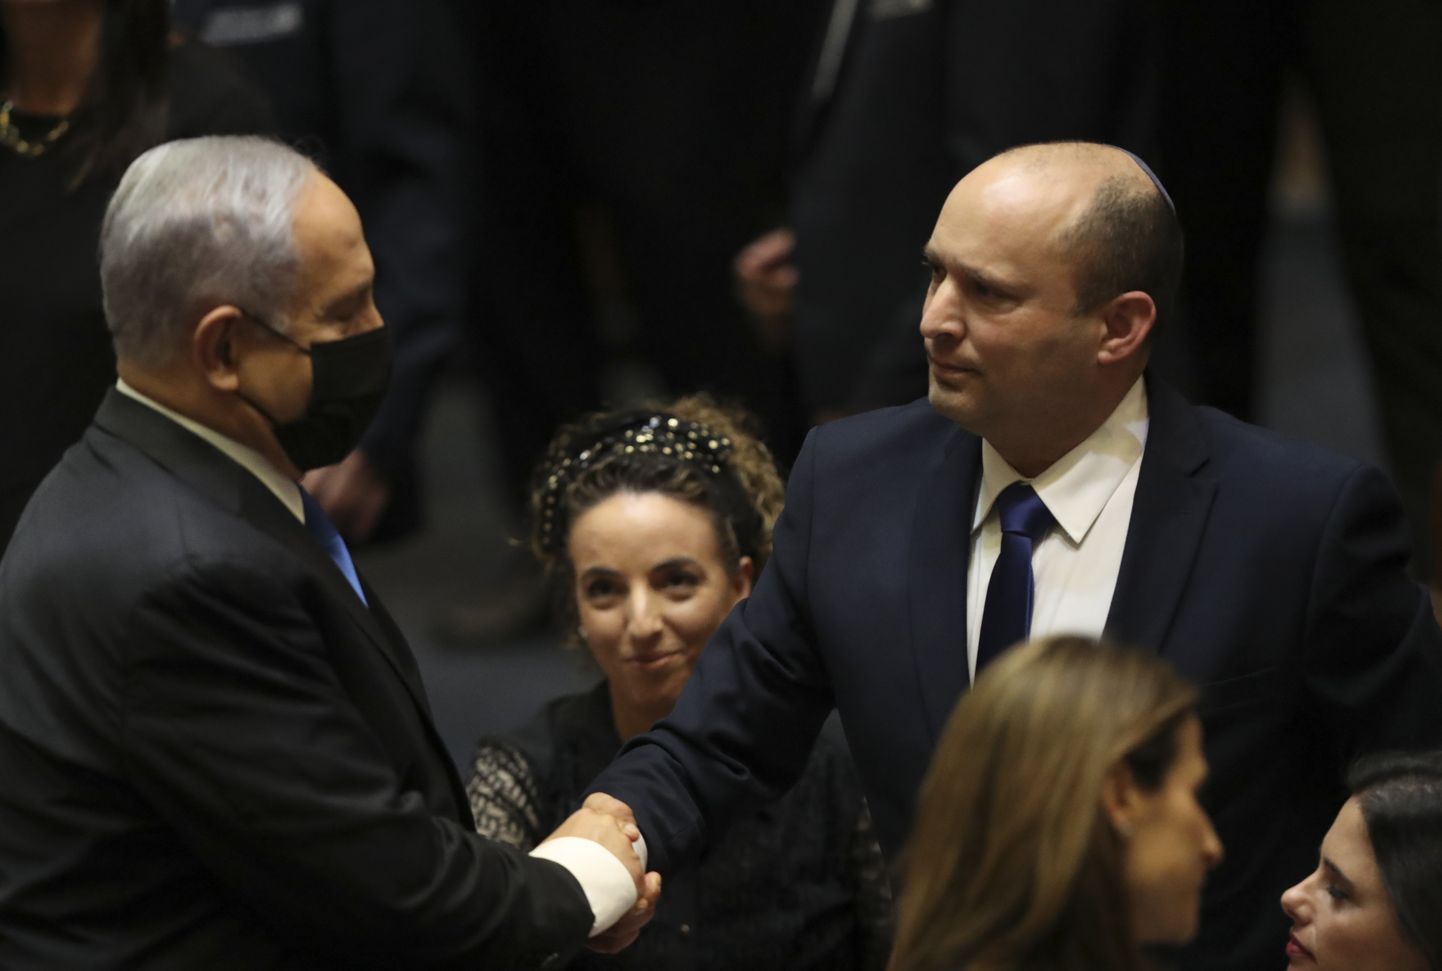 Iisraeli uus peaminister Naftali Bennett kätles senise peaminister Benjamin Netanyahuga